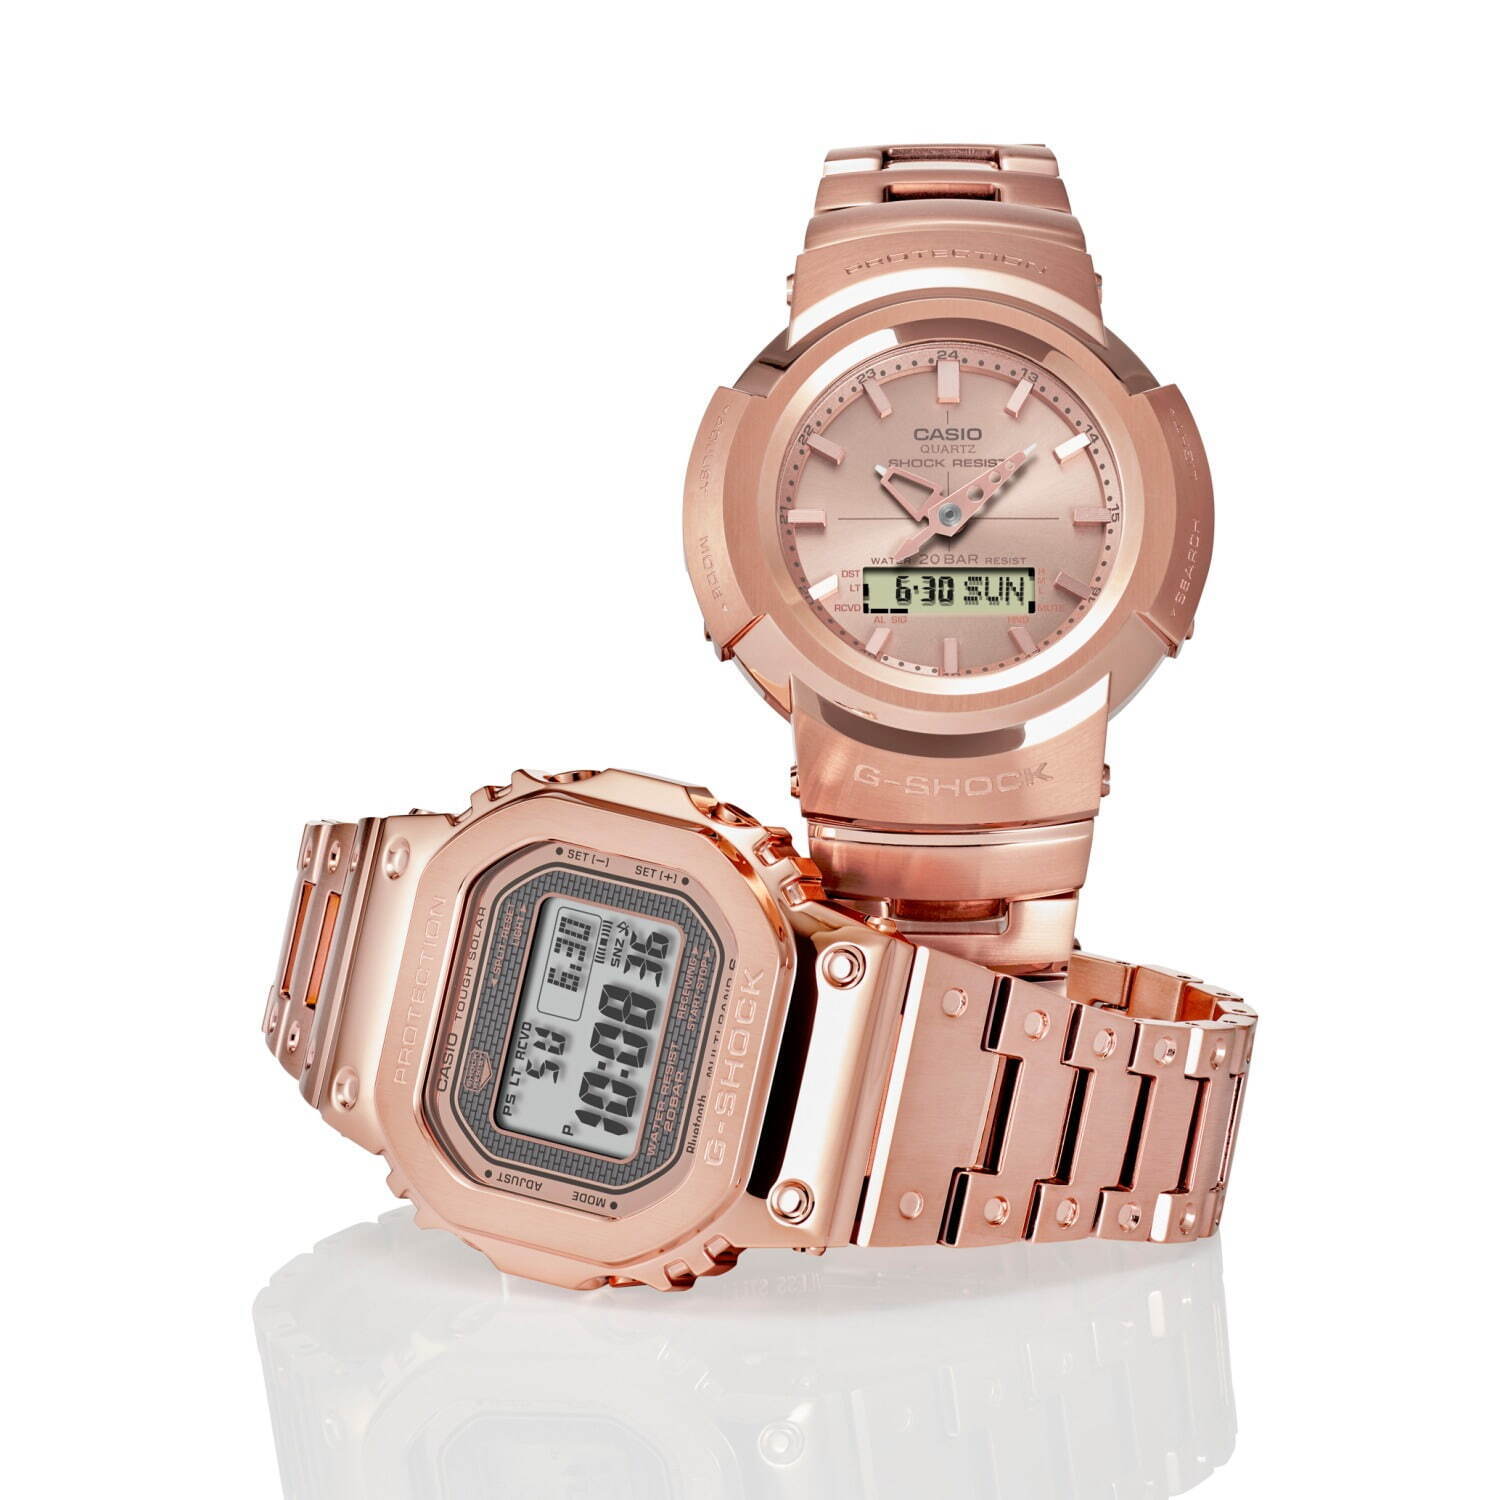 G-SHOCK“ローズゴールド”のフルメタル腕時計、“金属の塊”から削りだ ...